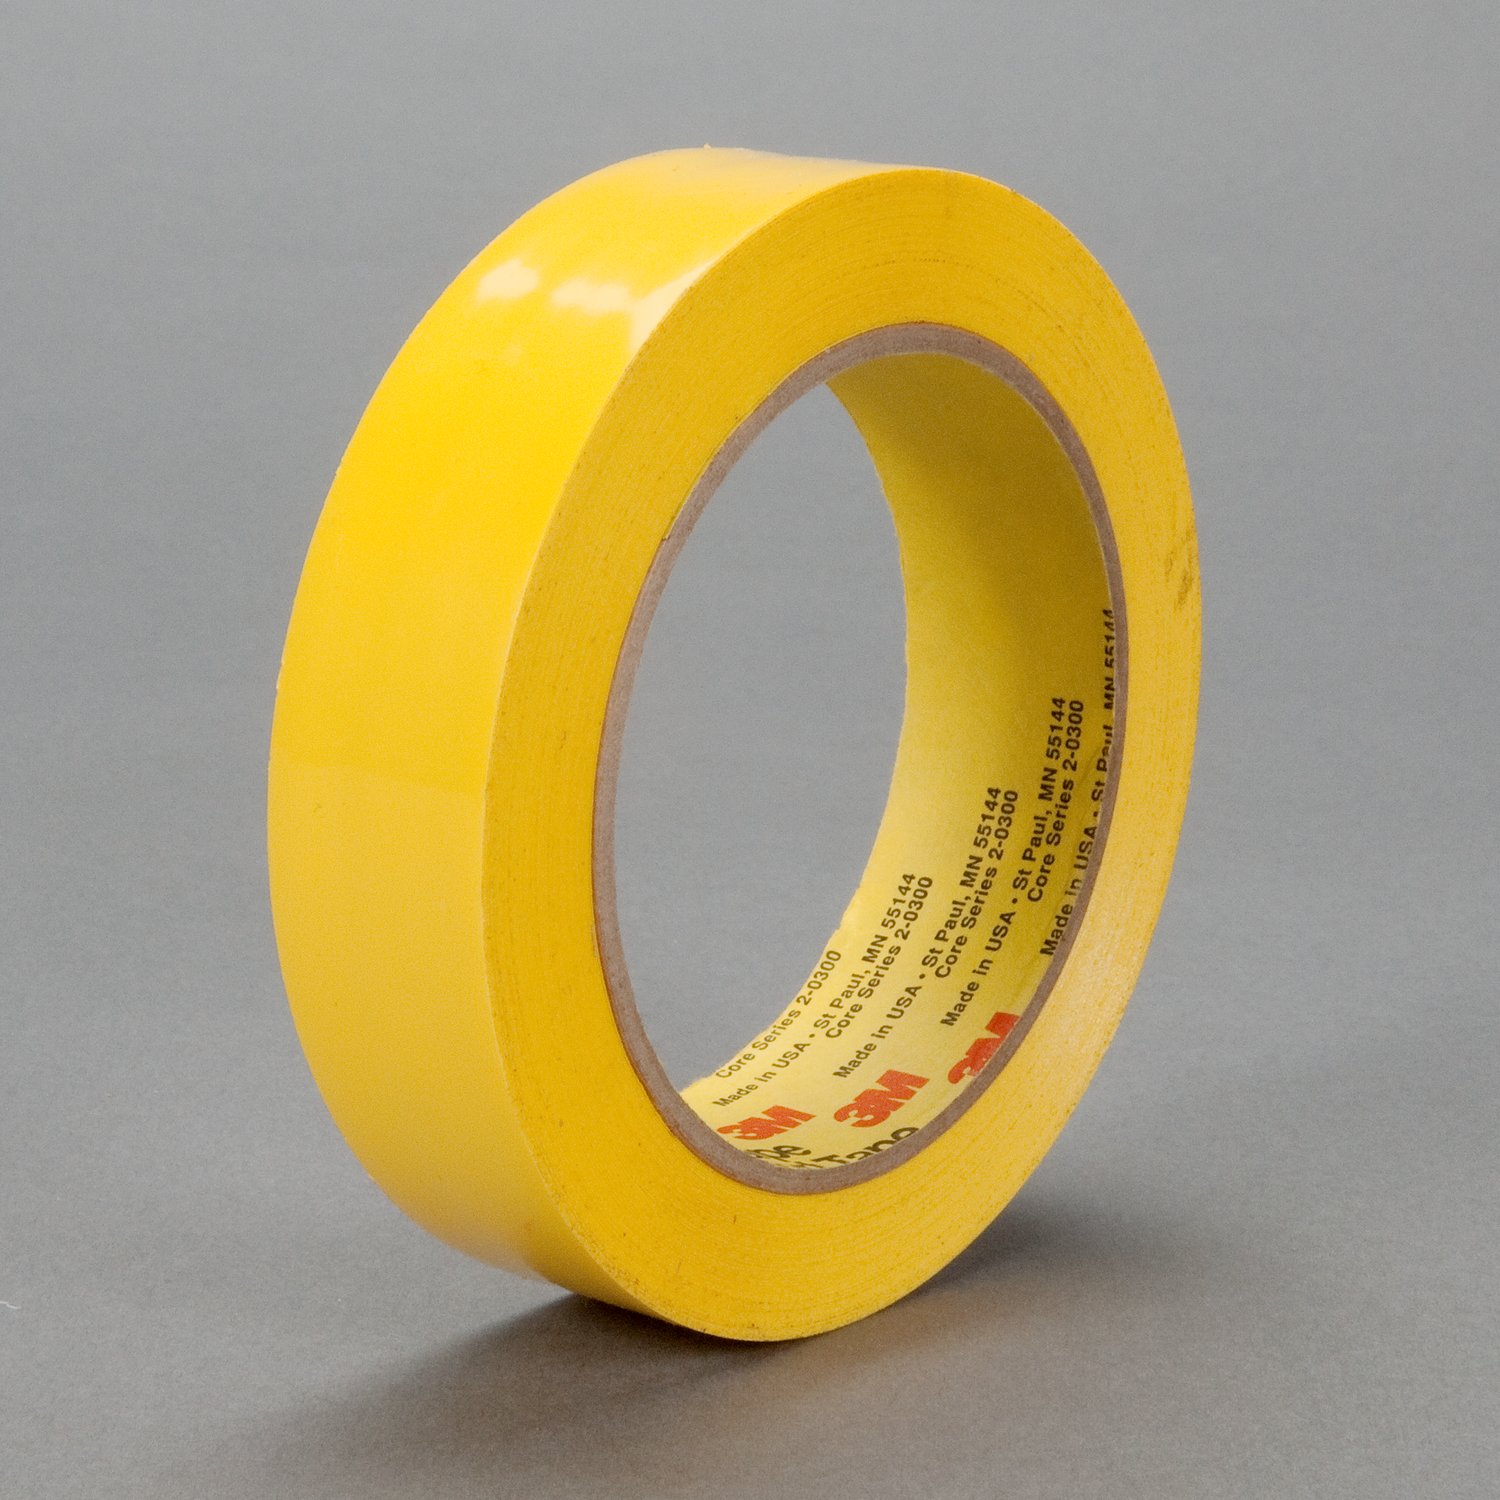 7000001163 - 3M Polyethylene Tape 483, Yellow, 2 in x 36 yd, 5.0 mil, 24 rolls per
case